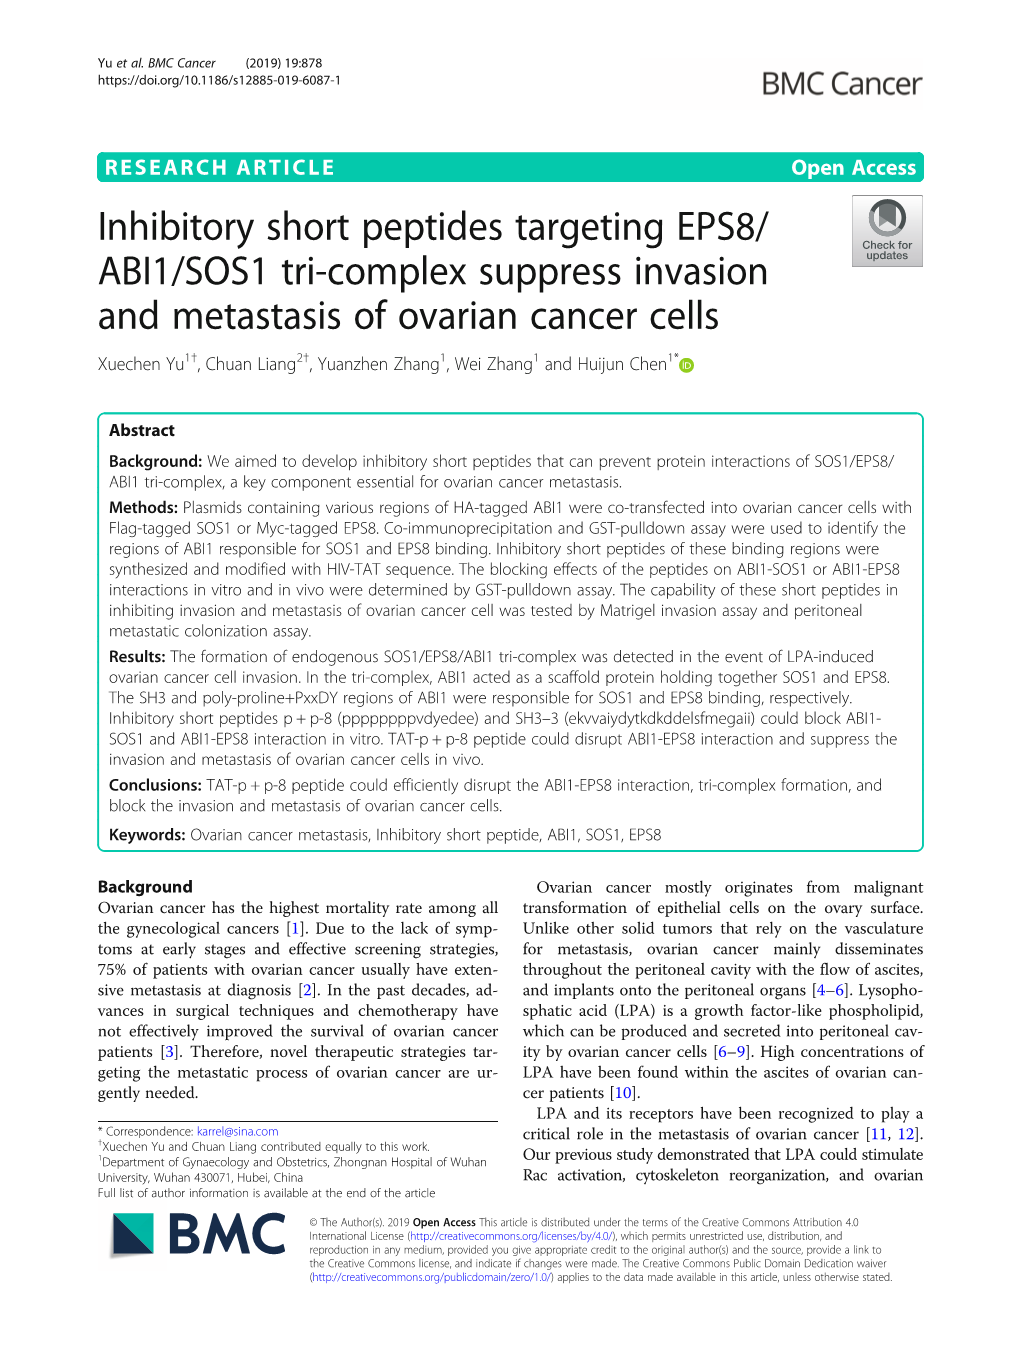 Inhibitory Short Peptides Targeting EPS8/ABI1/SOS1 Tri-Complex